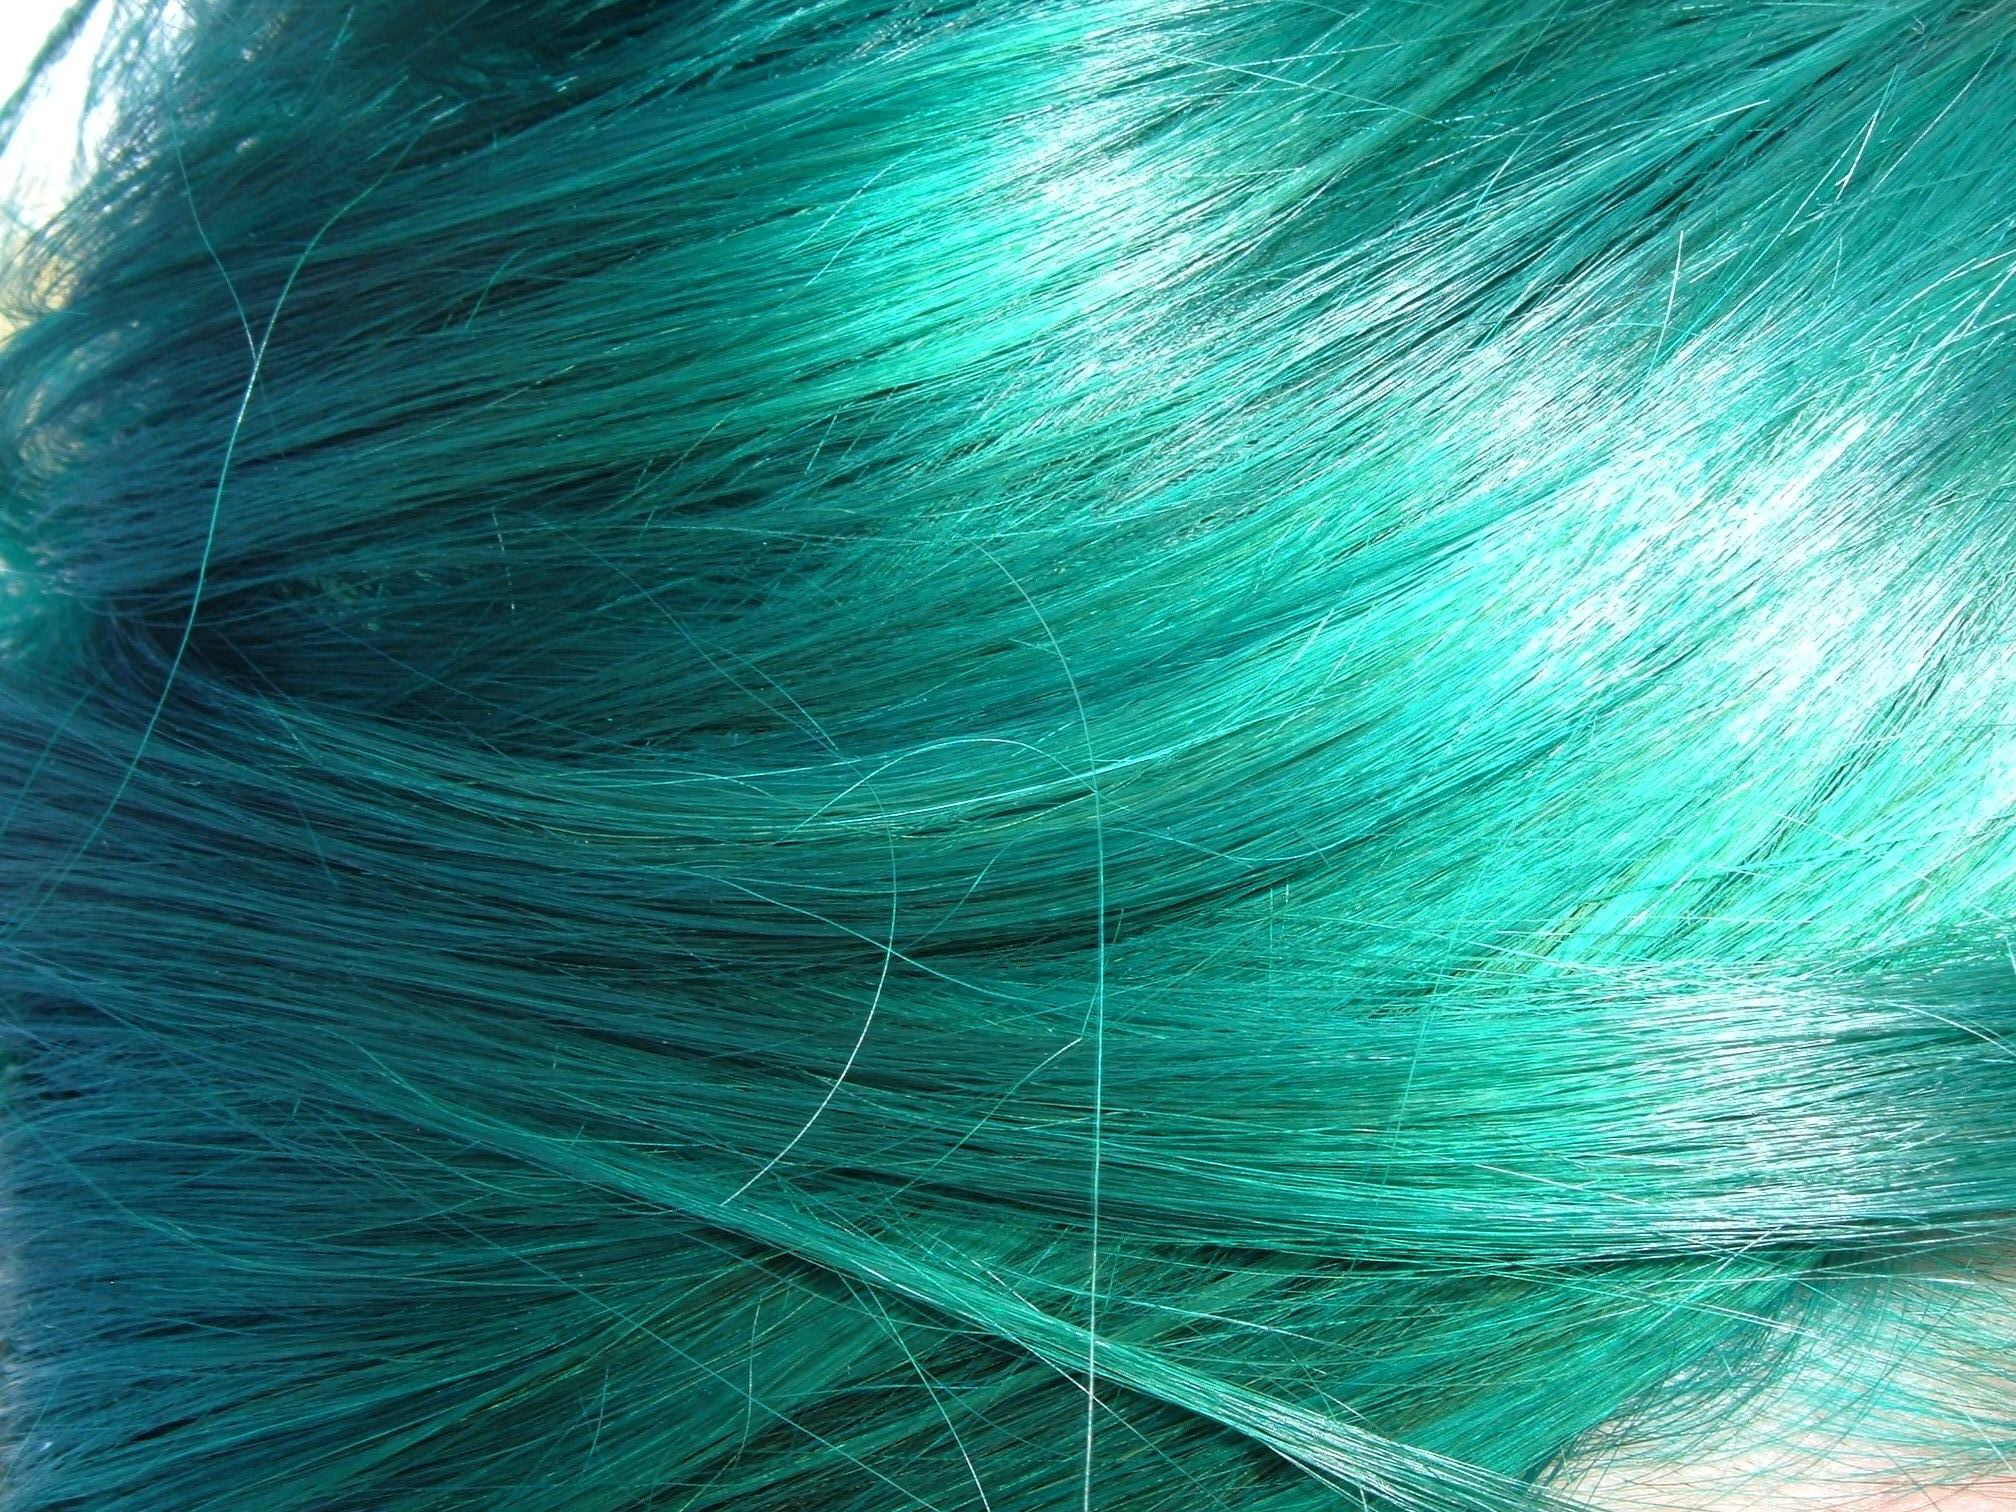 hair texture, background, blue hair texture, background